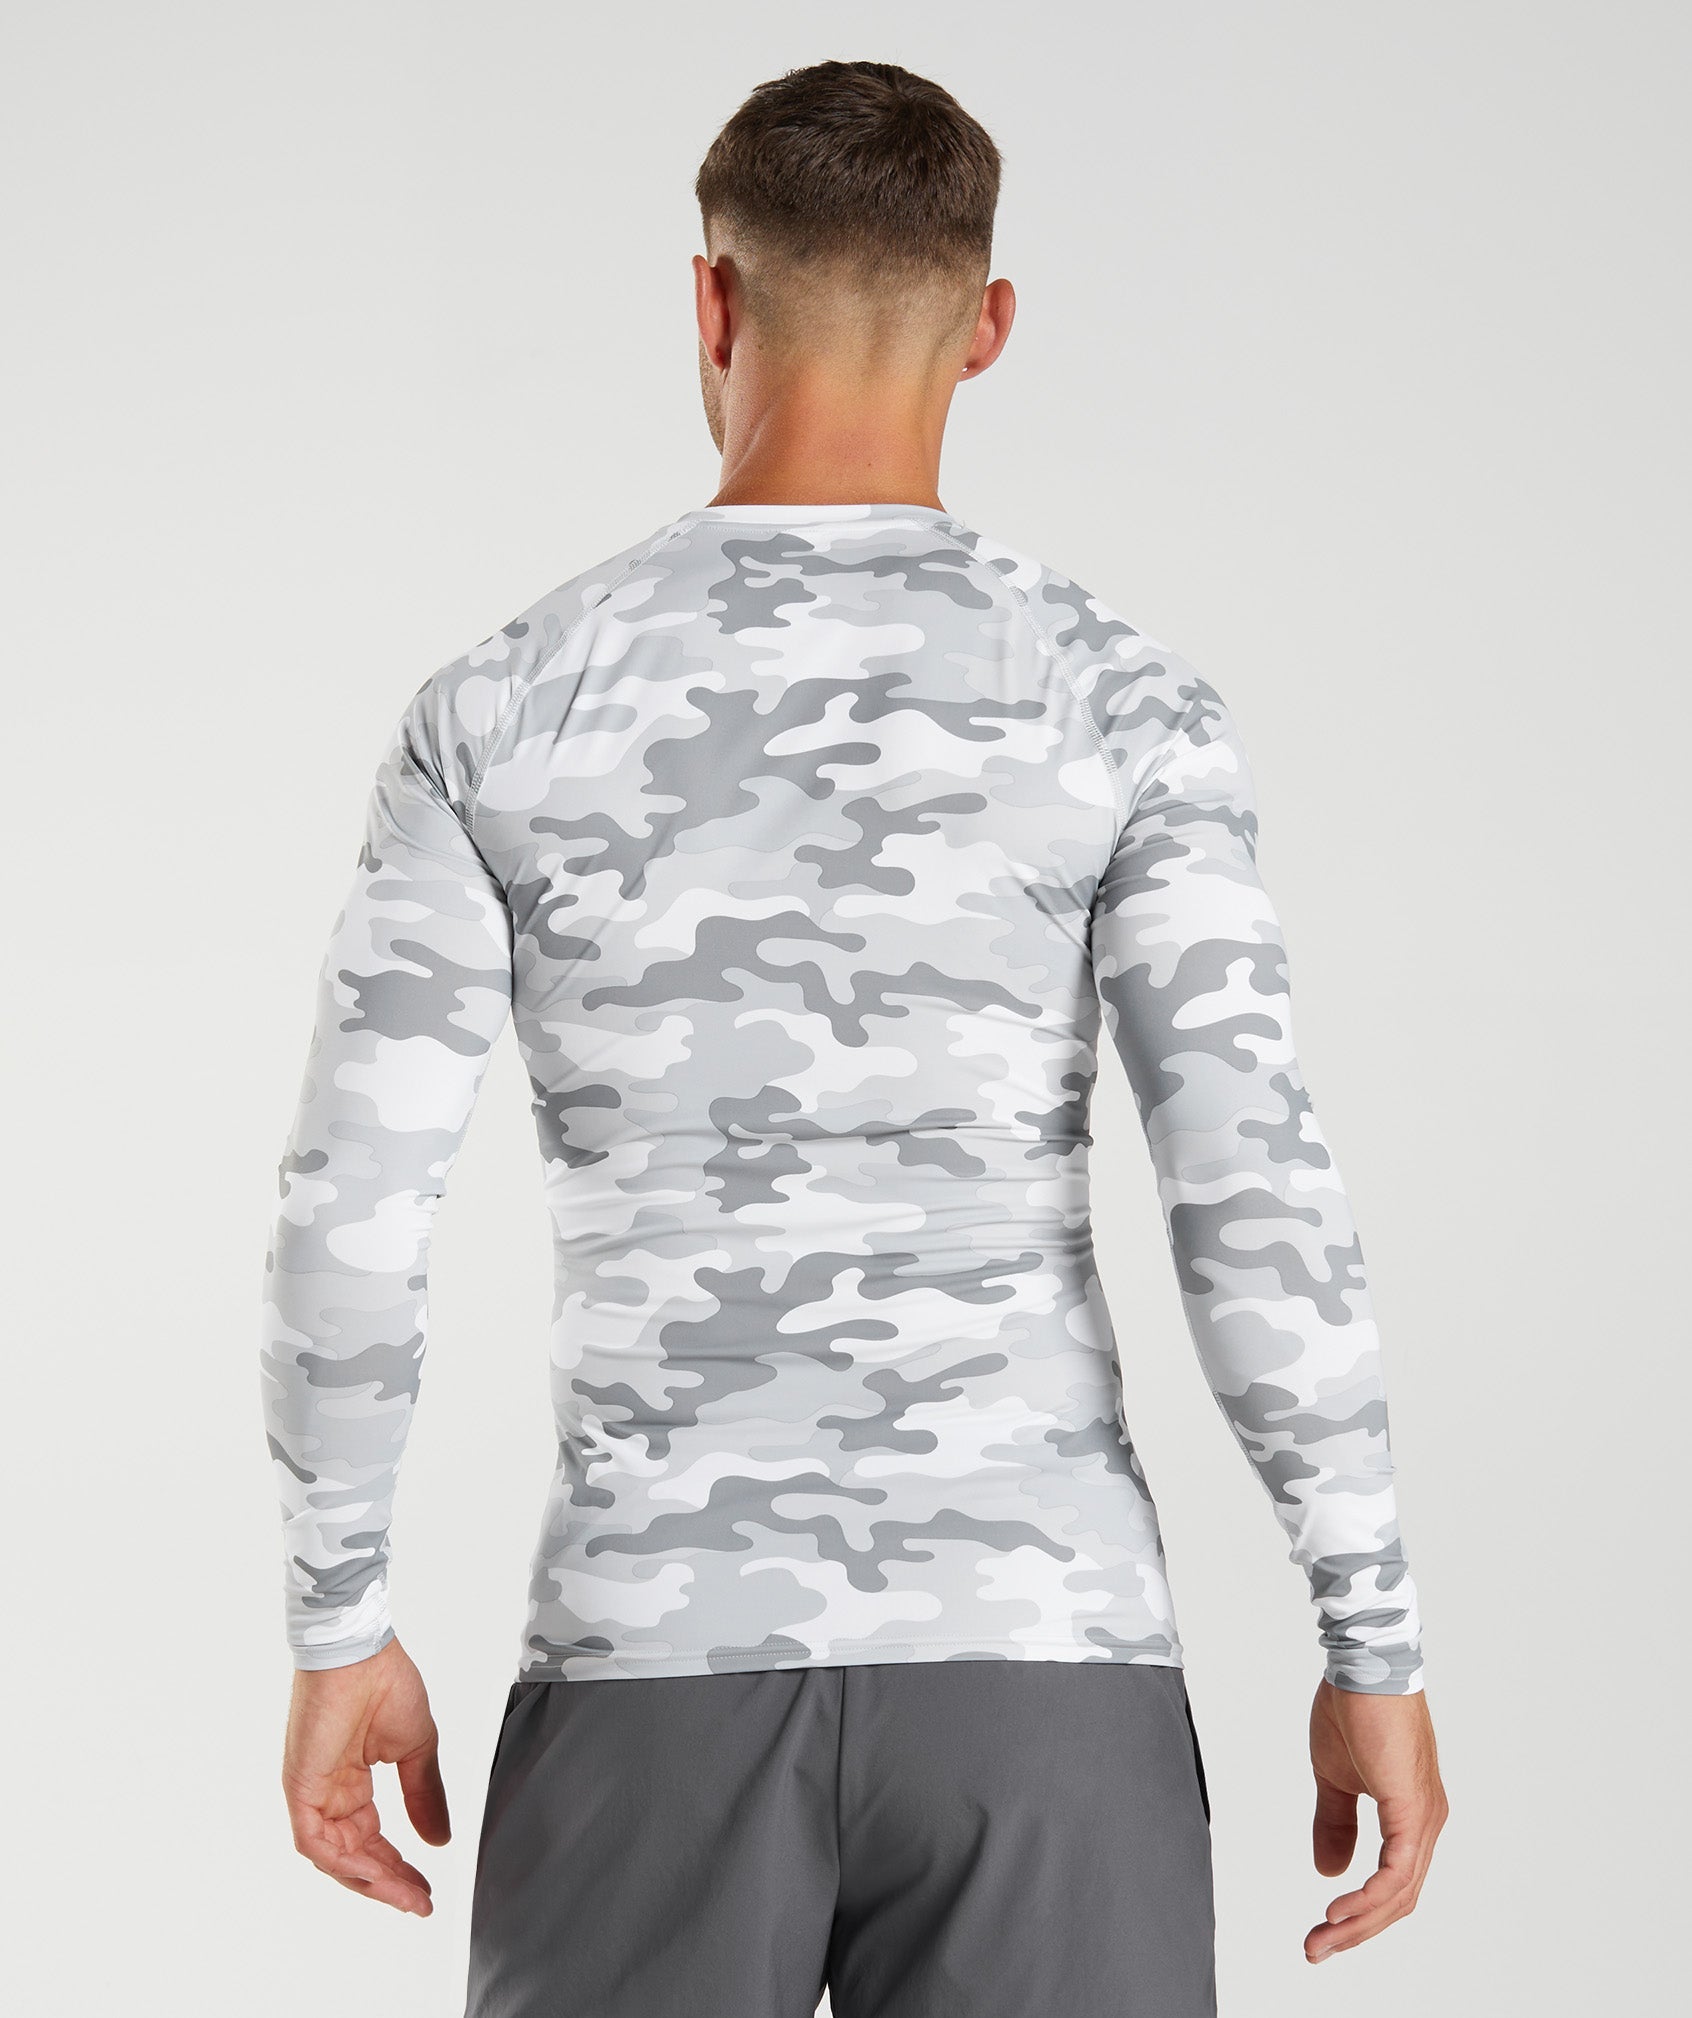 Gymshark Element Baselayer Long Sleeve Top - Light Grey Print